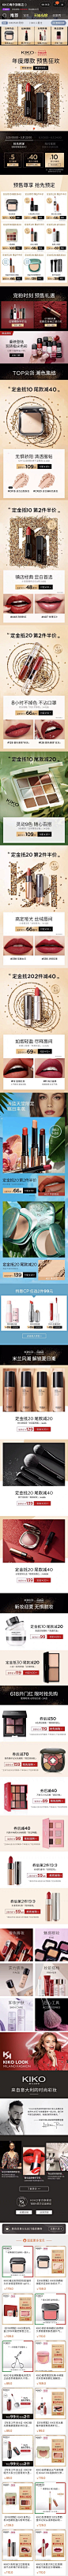 kiko海外 彩妆 大促色 产品堆台 618预售 20年手机淘宝店铺首页